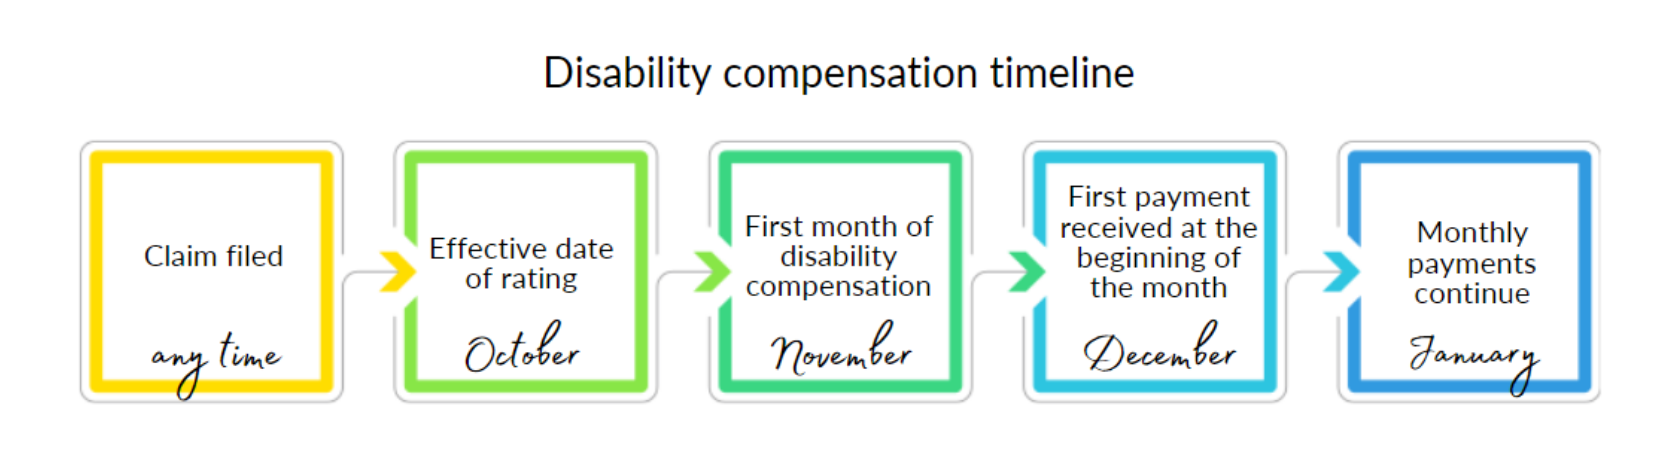 disability compensation image2